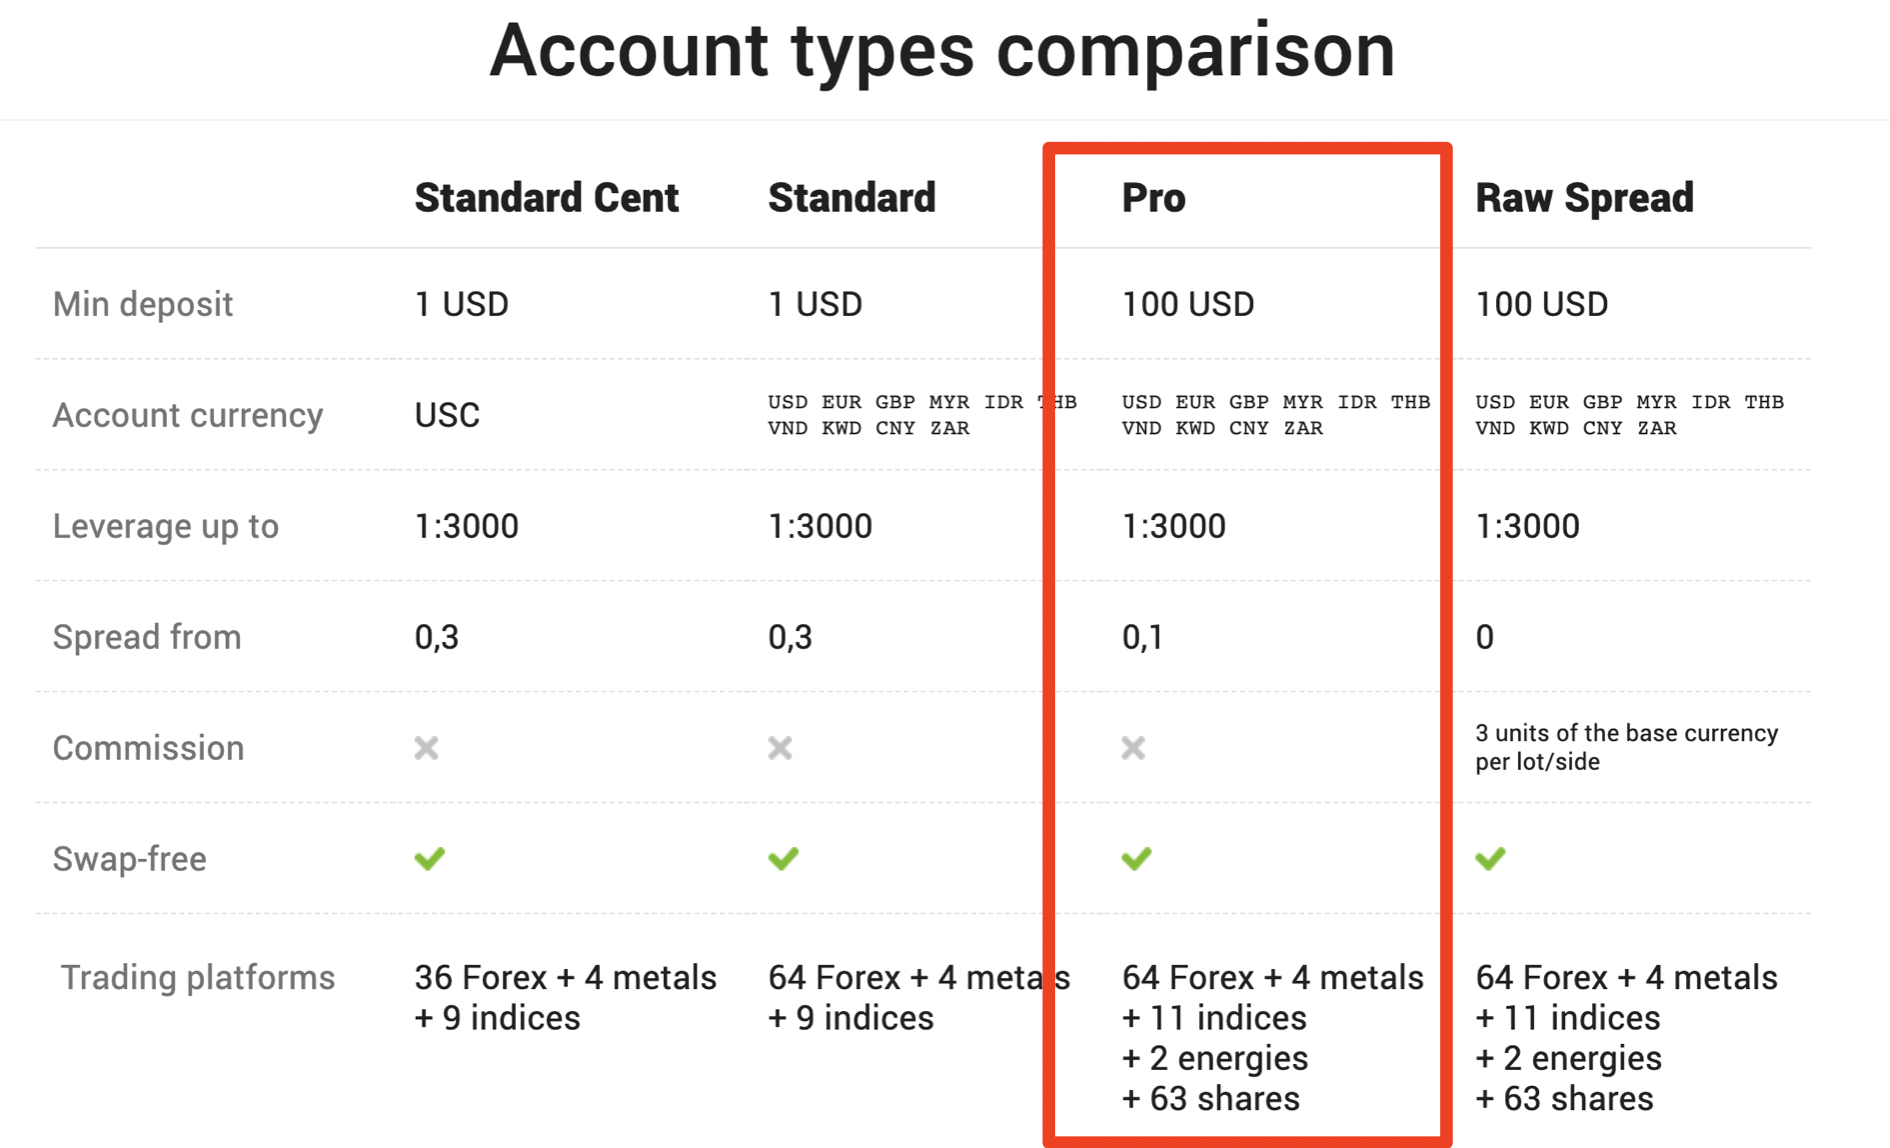 JustMarkets account types comparison